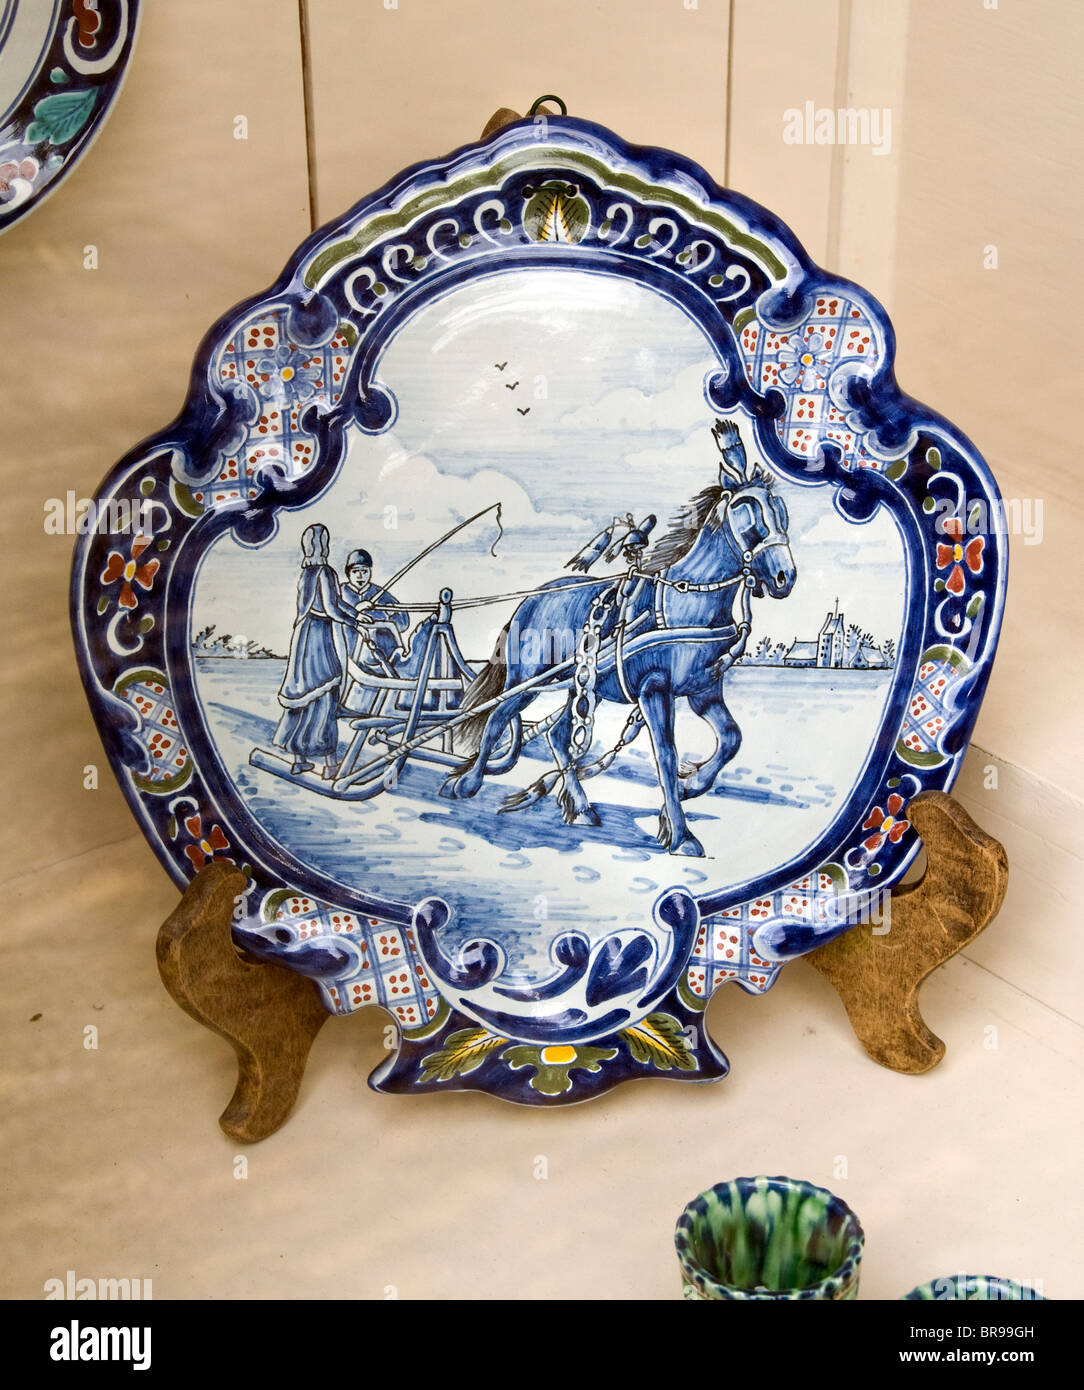 sleigh Workum Friesland Netherlands ceramic pottery earthenware plate Stock Photo